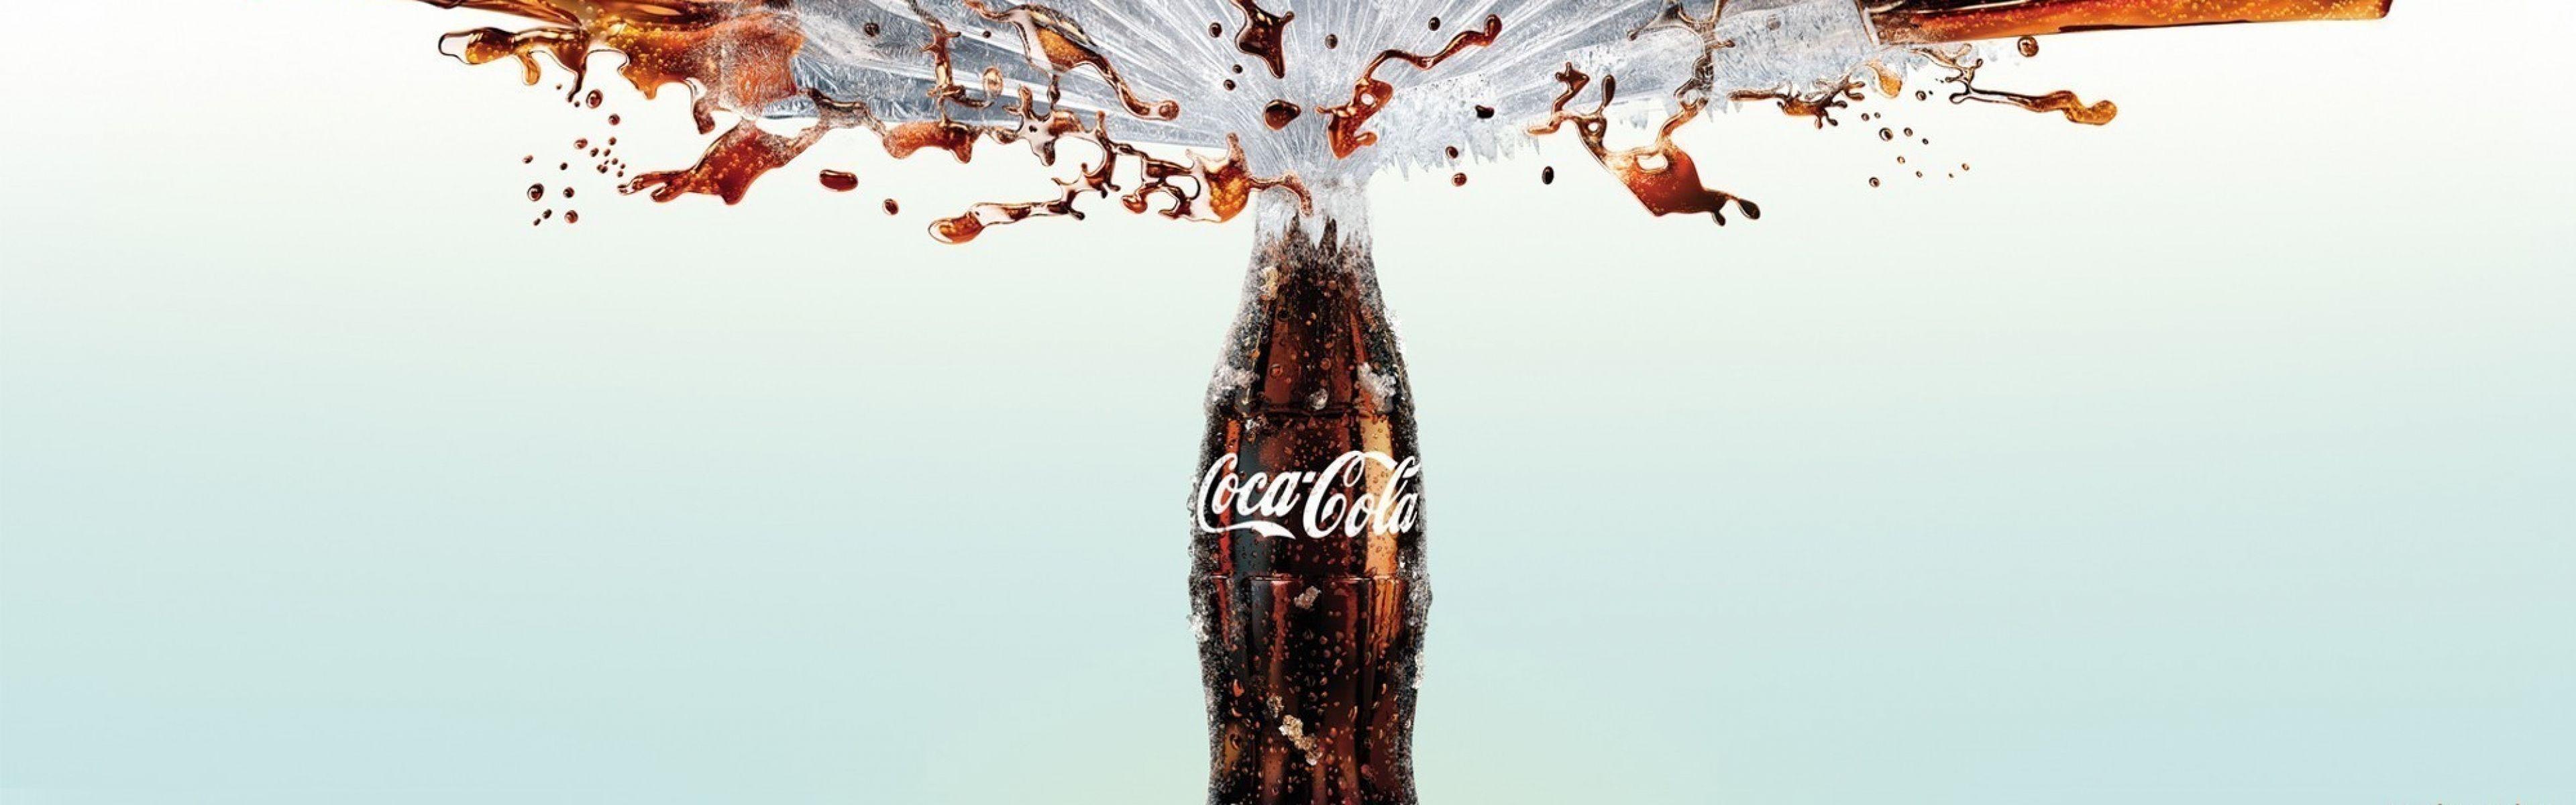 Coca Cola Bottle Wallpaper Photo 15375